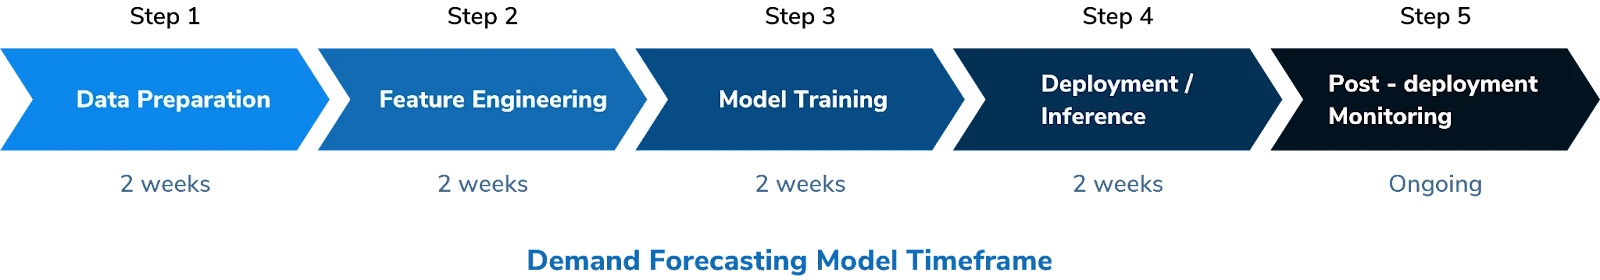 Demand Forecasting Model Timeframe